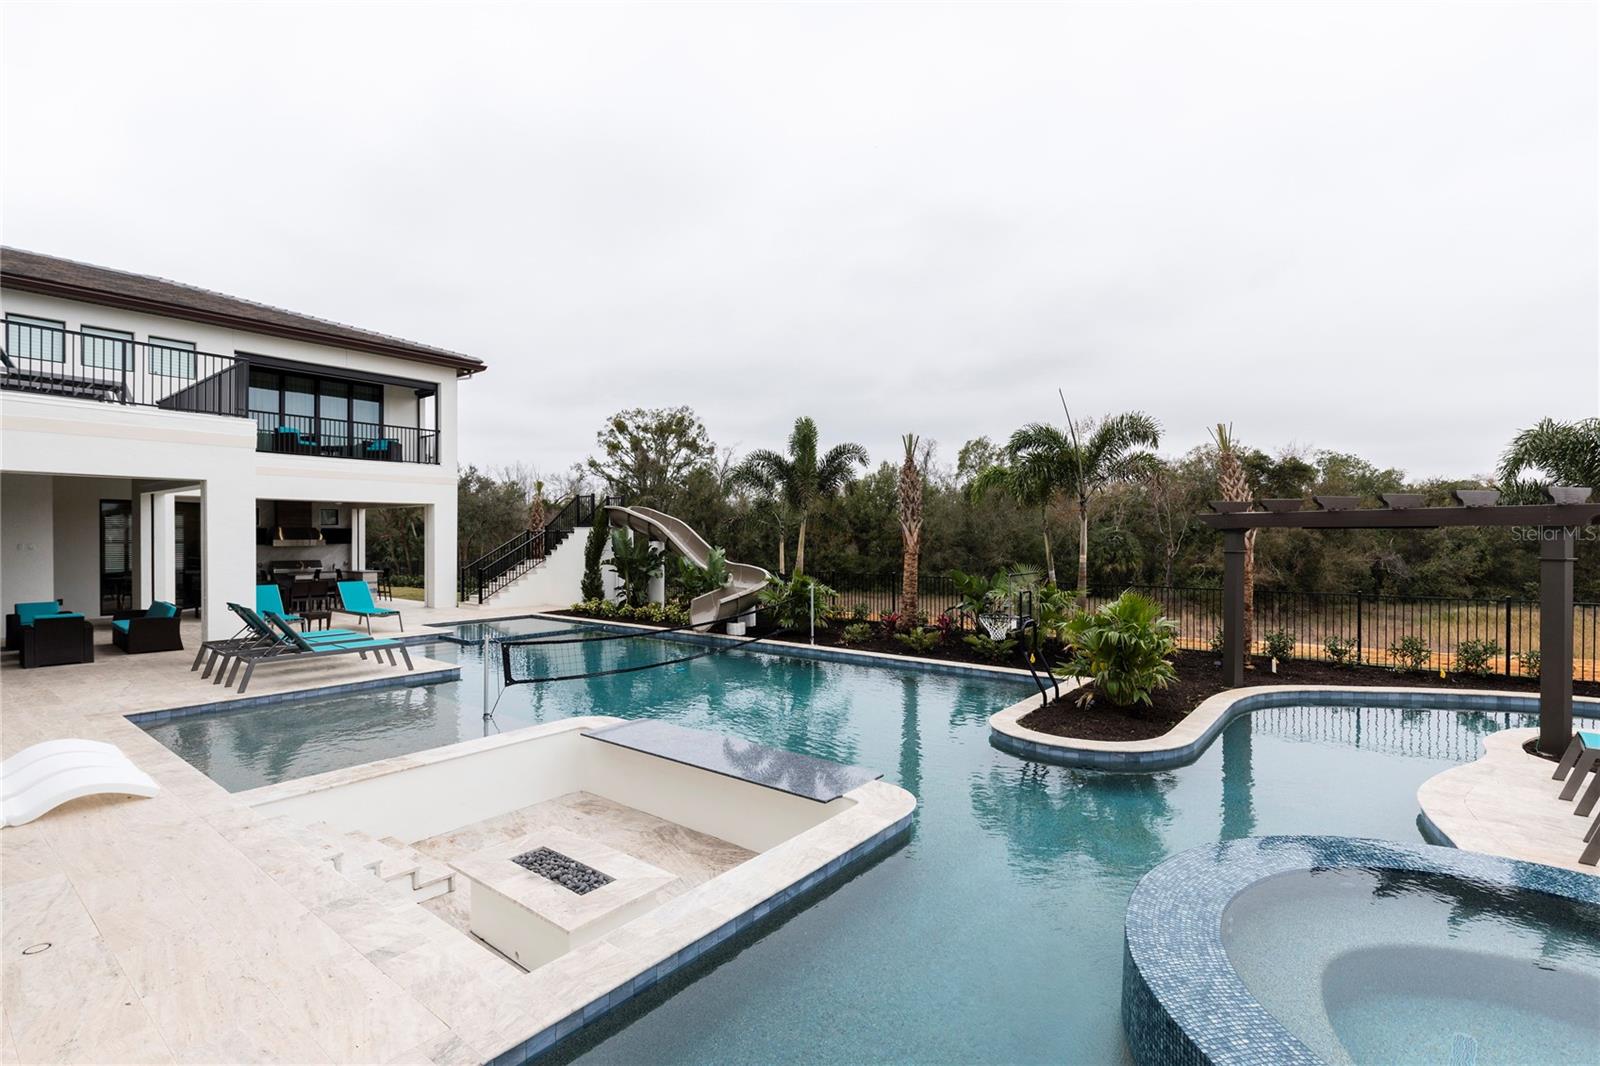 Slide show image of the Orlando Florida Home for Sale 75